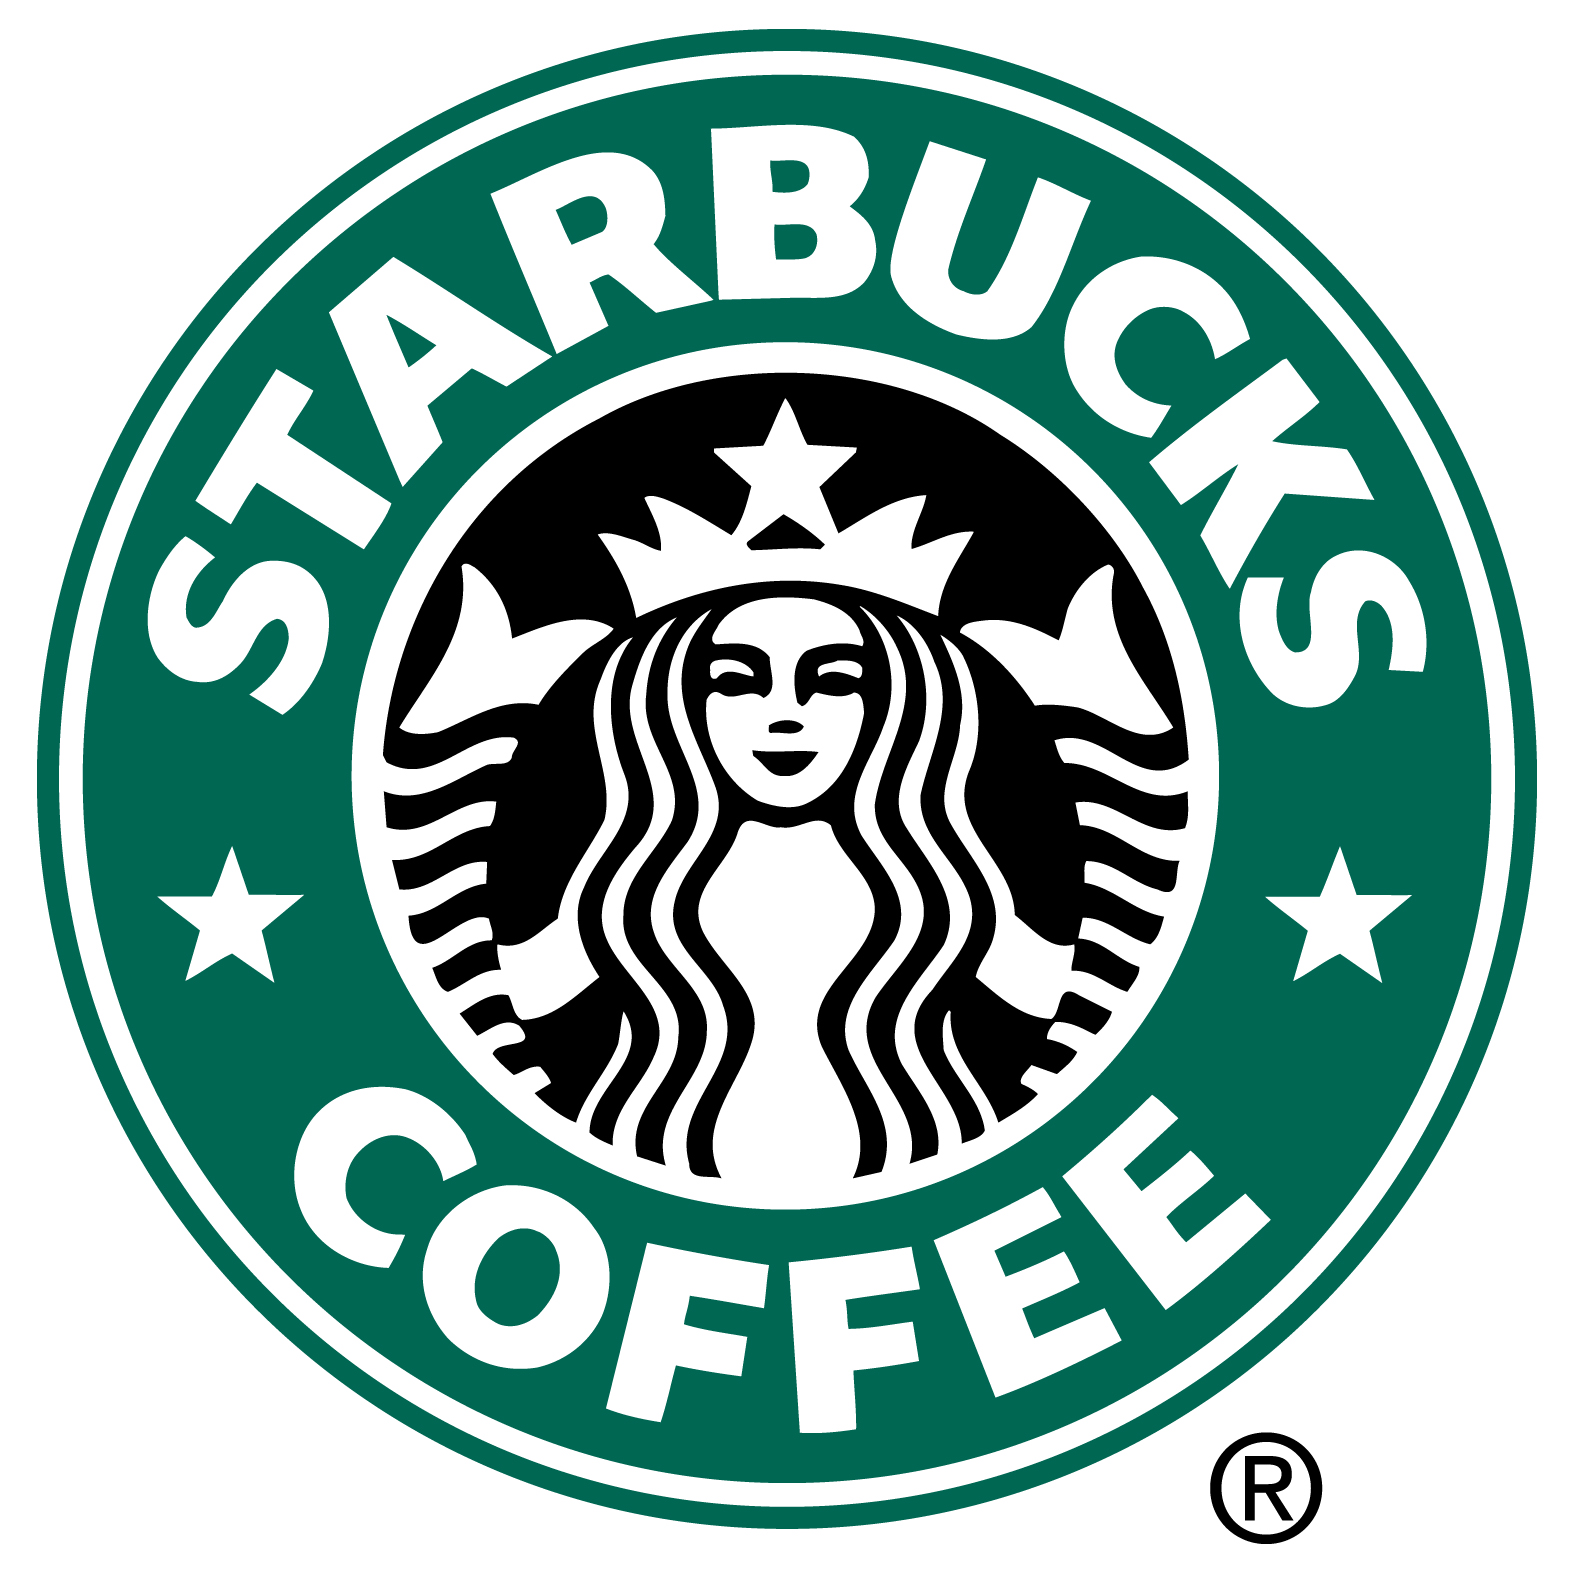 Clipart Starbucks Coffee Starbucks General Counsel